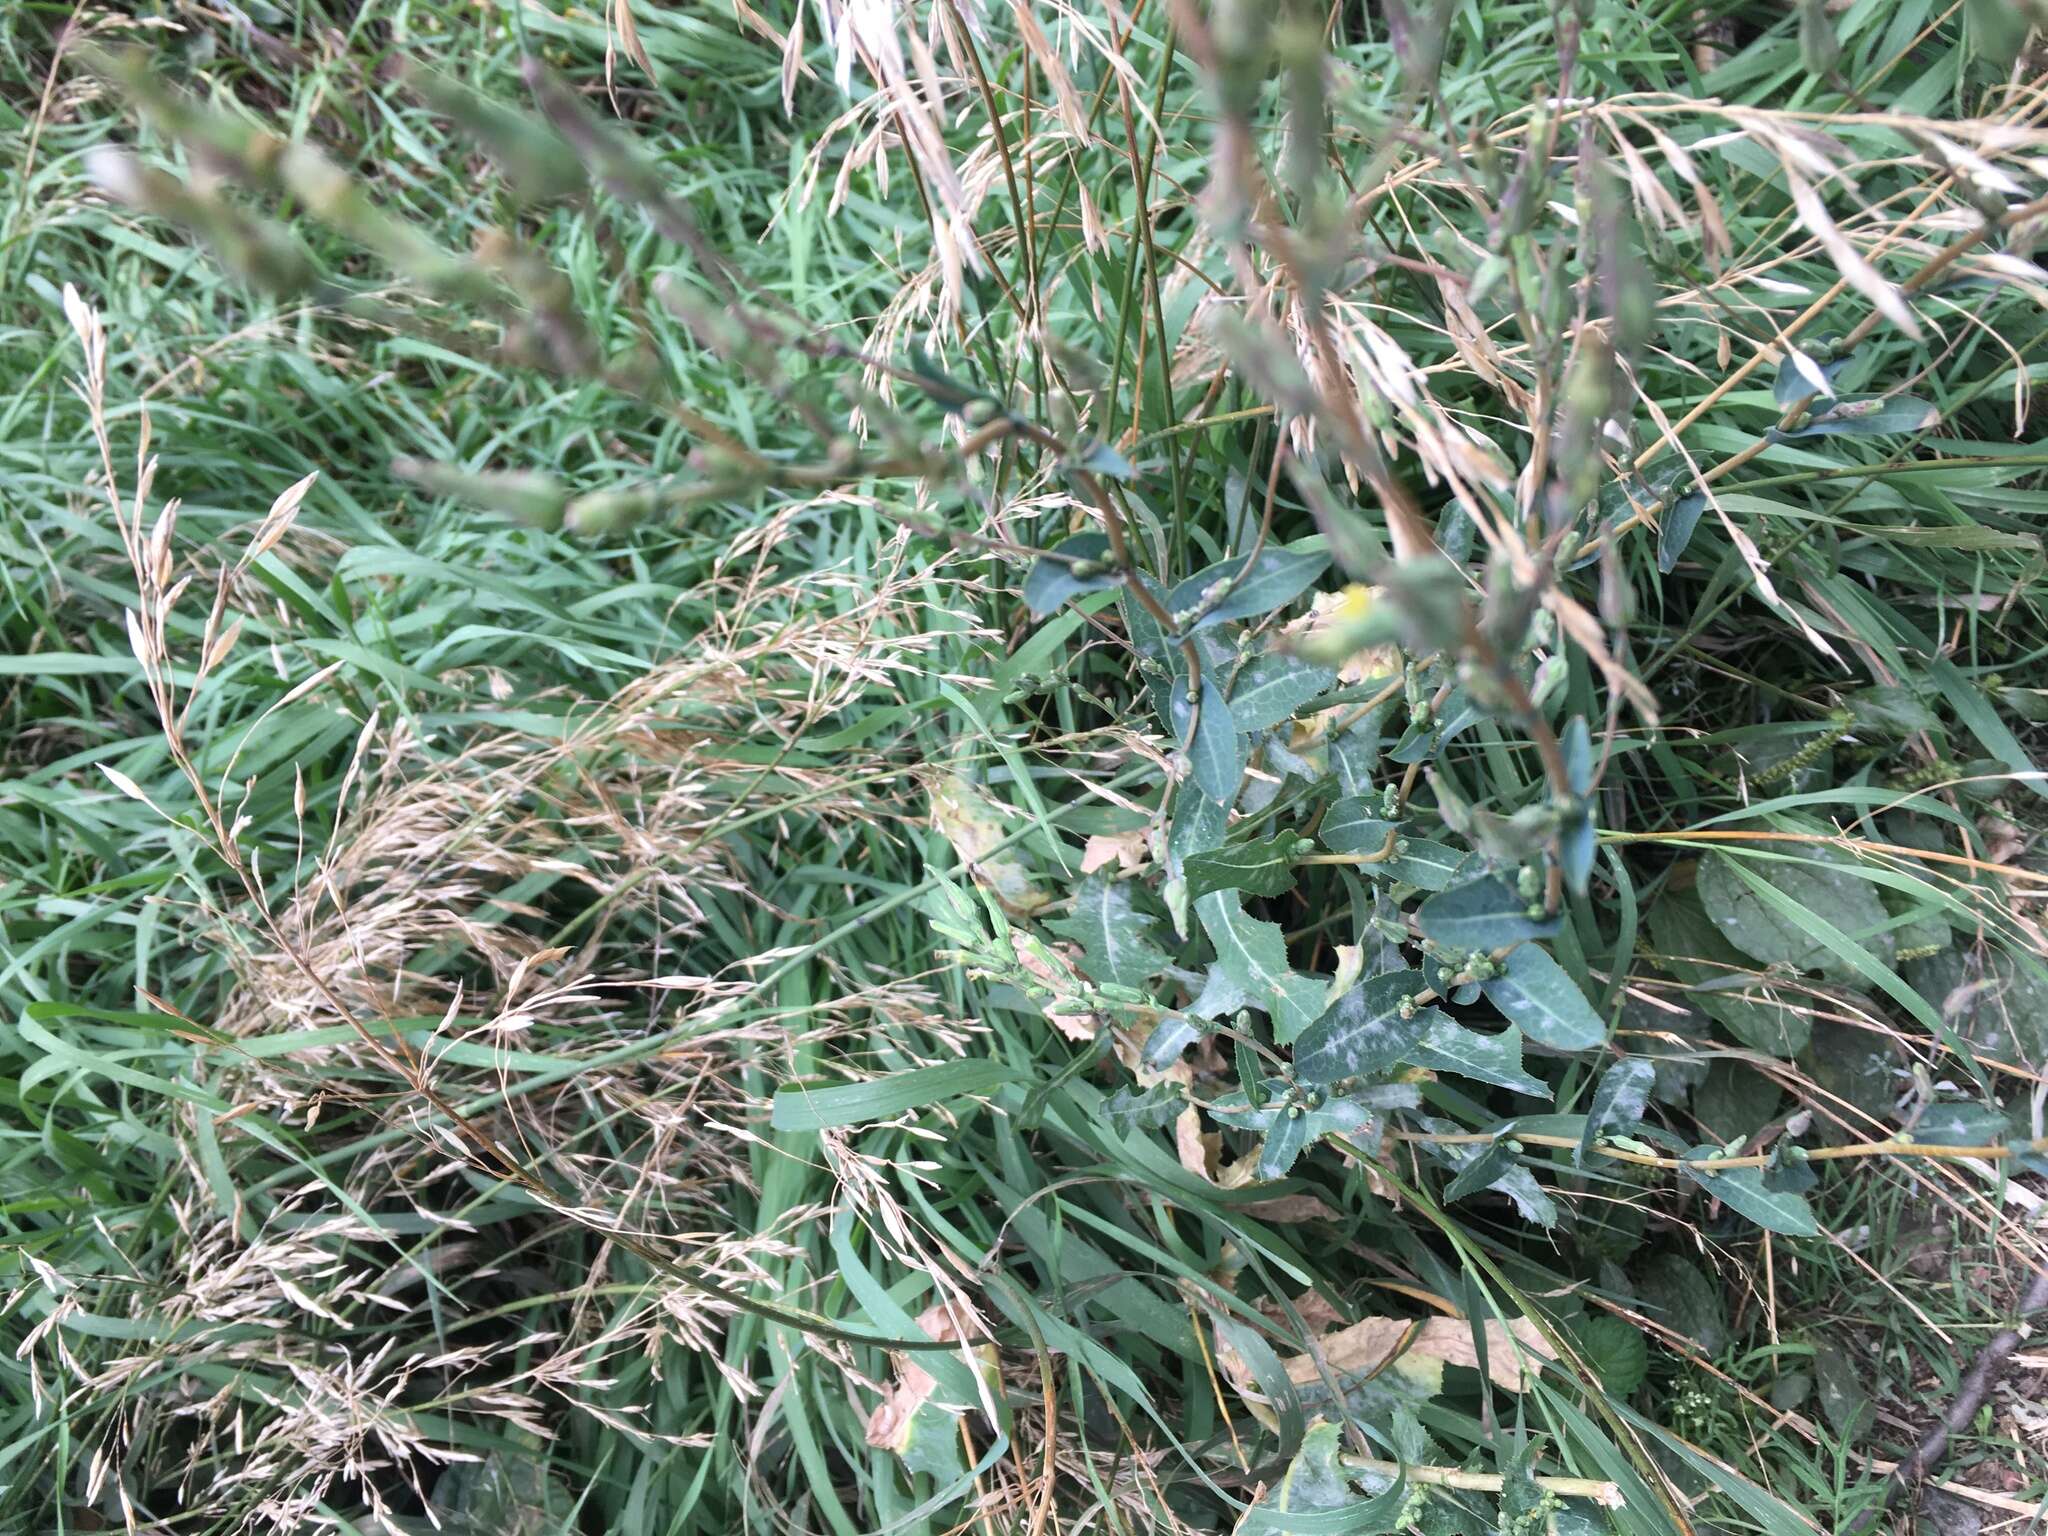 Image of creeping bentgrass